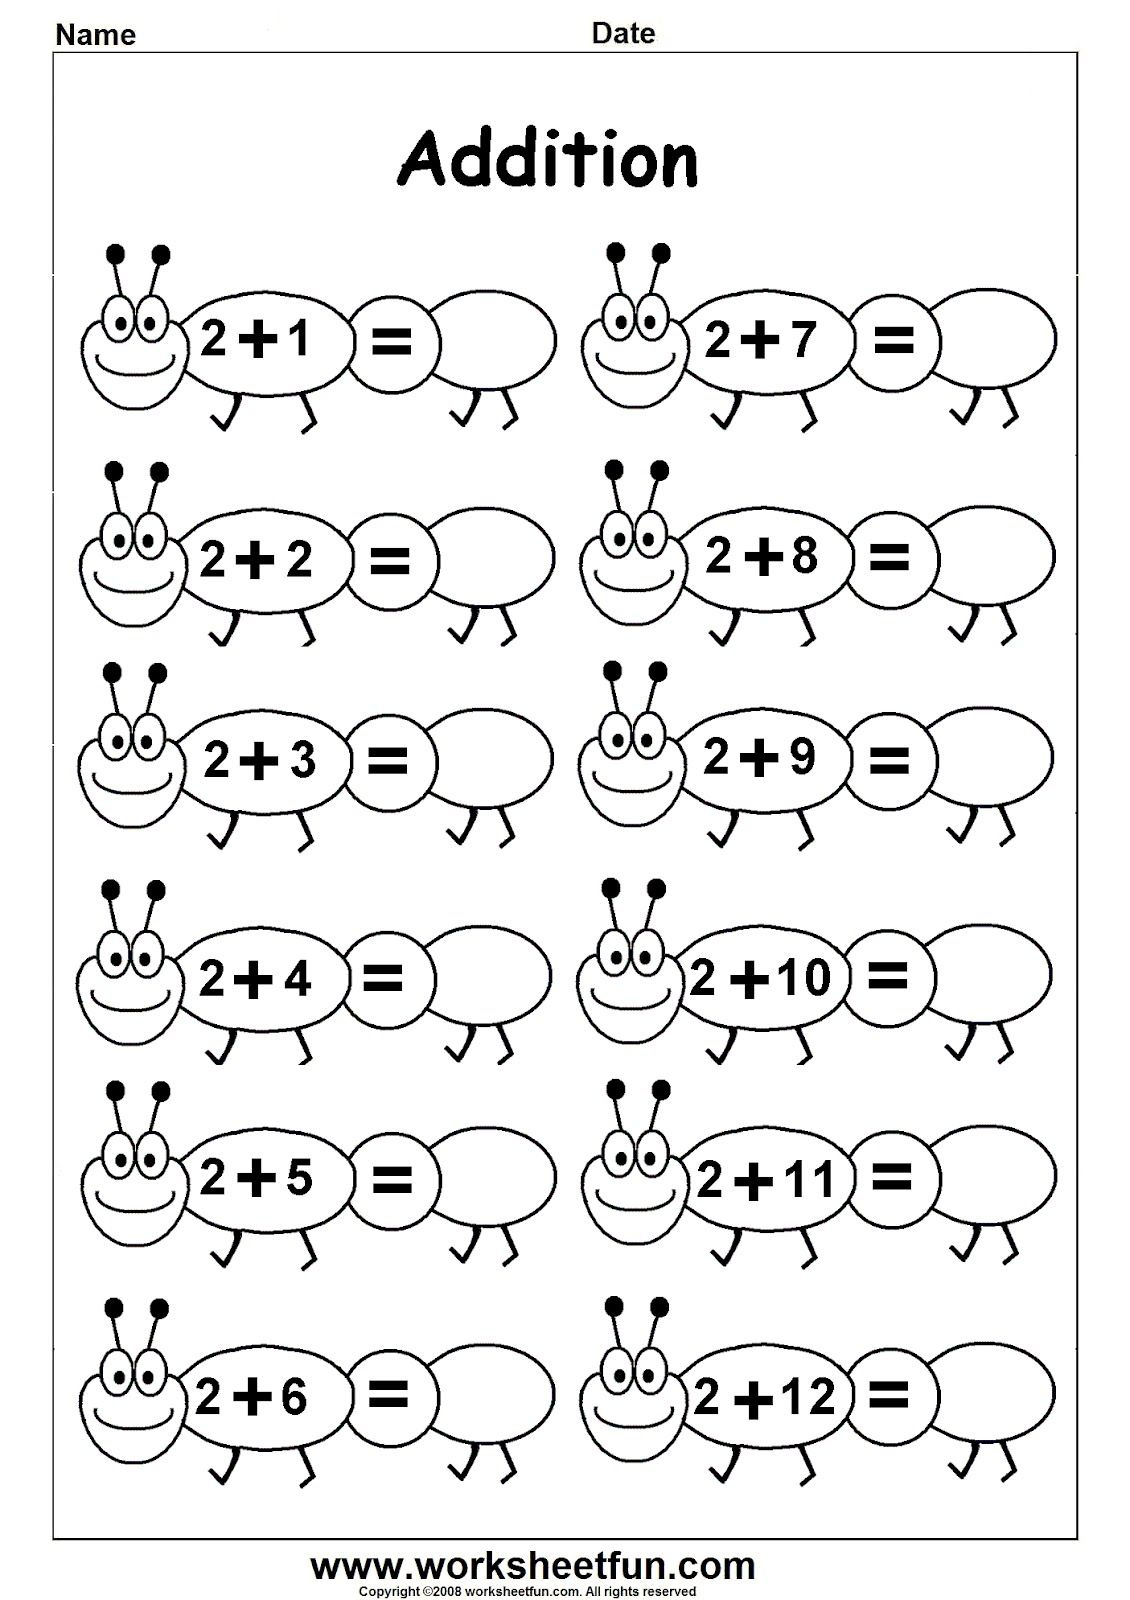 Worksheetfun - Free Printable Worksheets | Reinaldo.con.xto@gmail - Free Printable Time Worksheets For Kindergarten